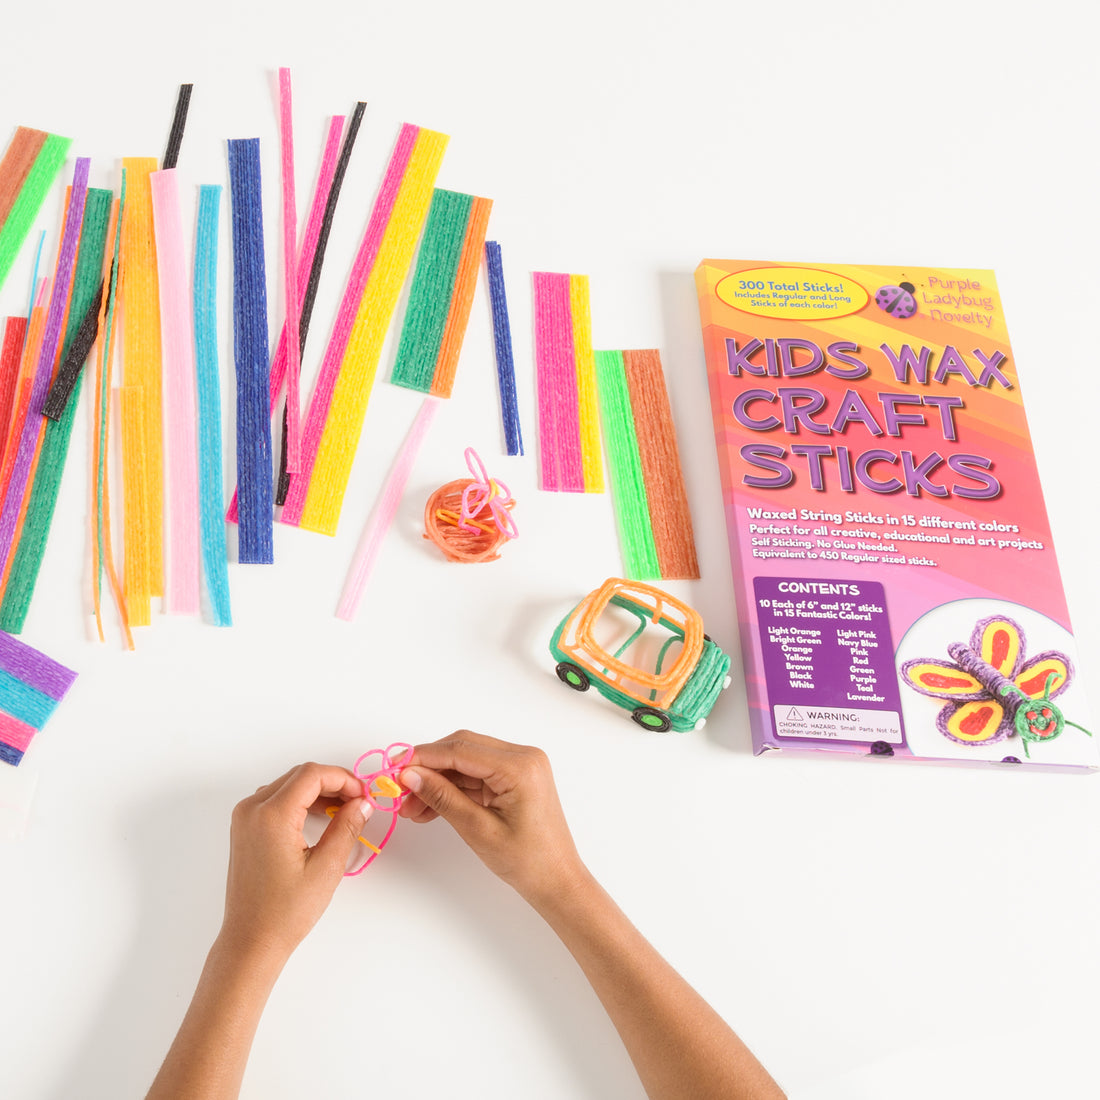 Wax Craft Sticks for kids by Purple Ladybug 